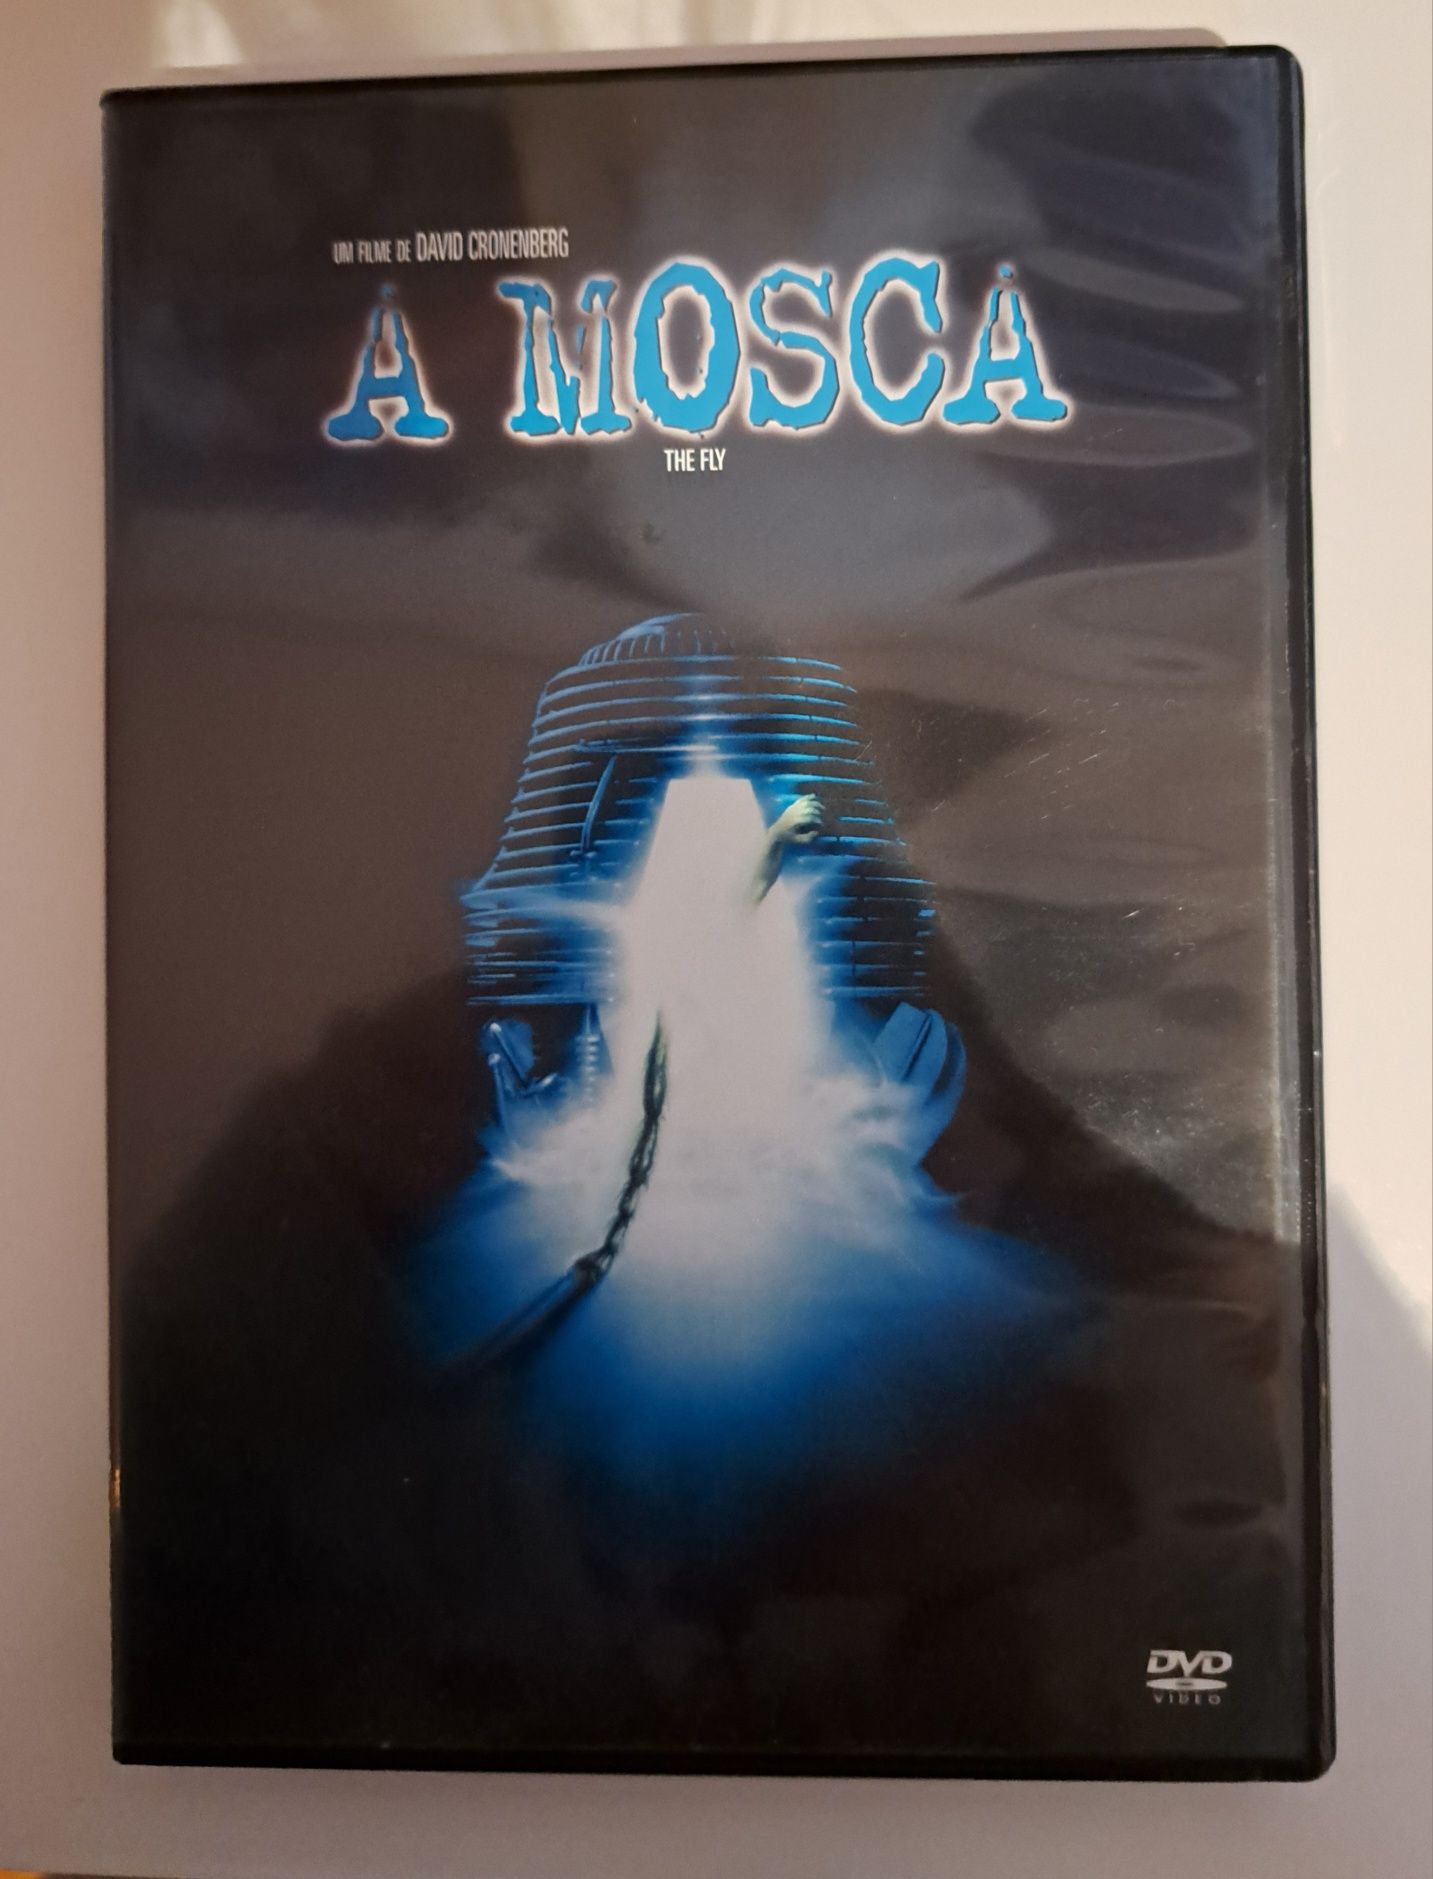 DVD - "A Mosca"/"The Fly"